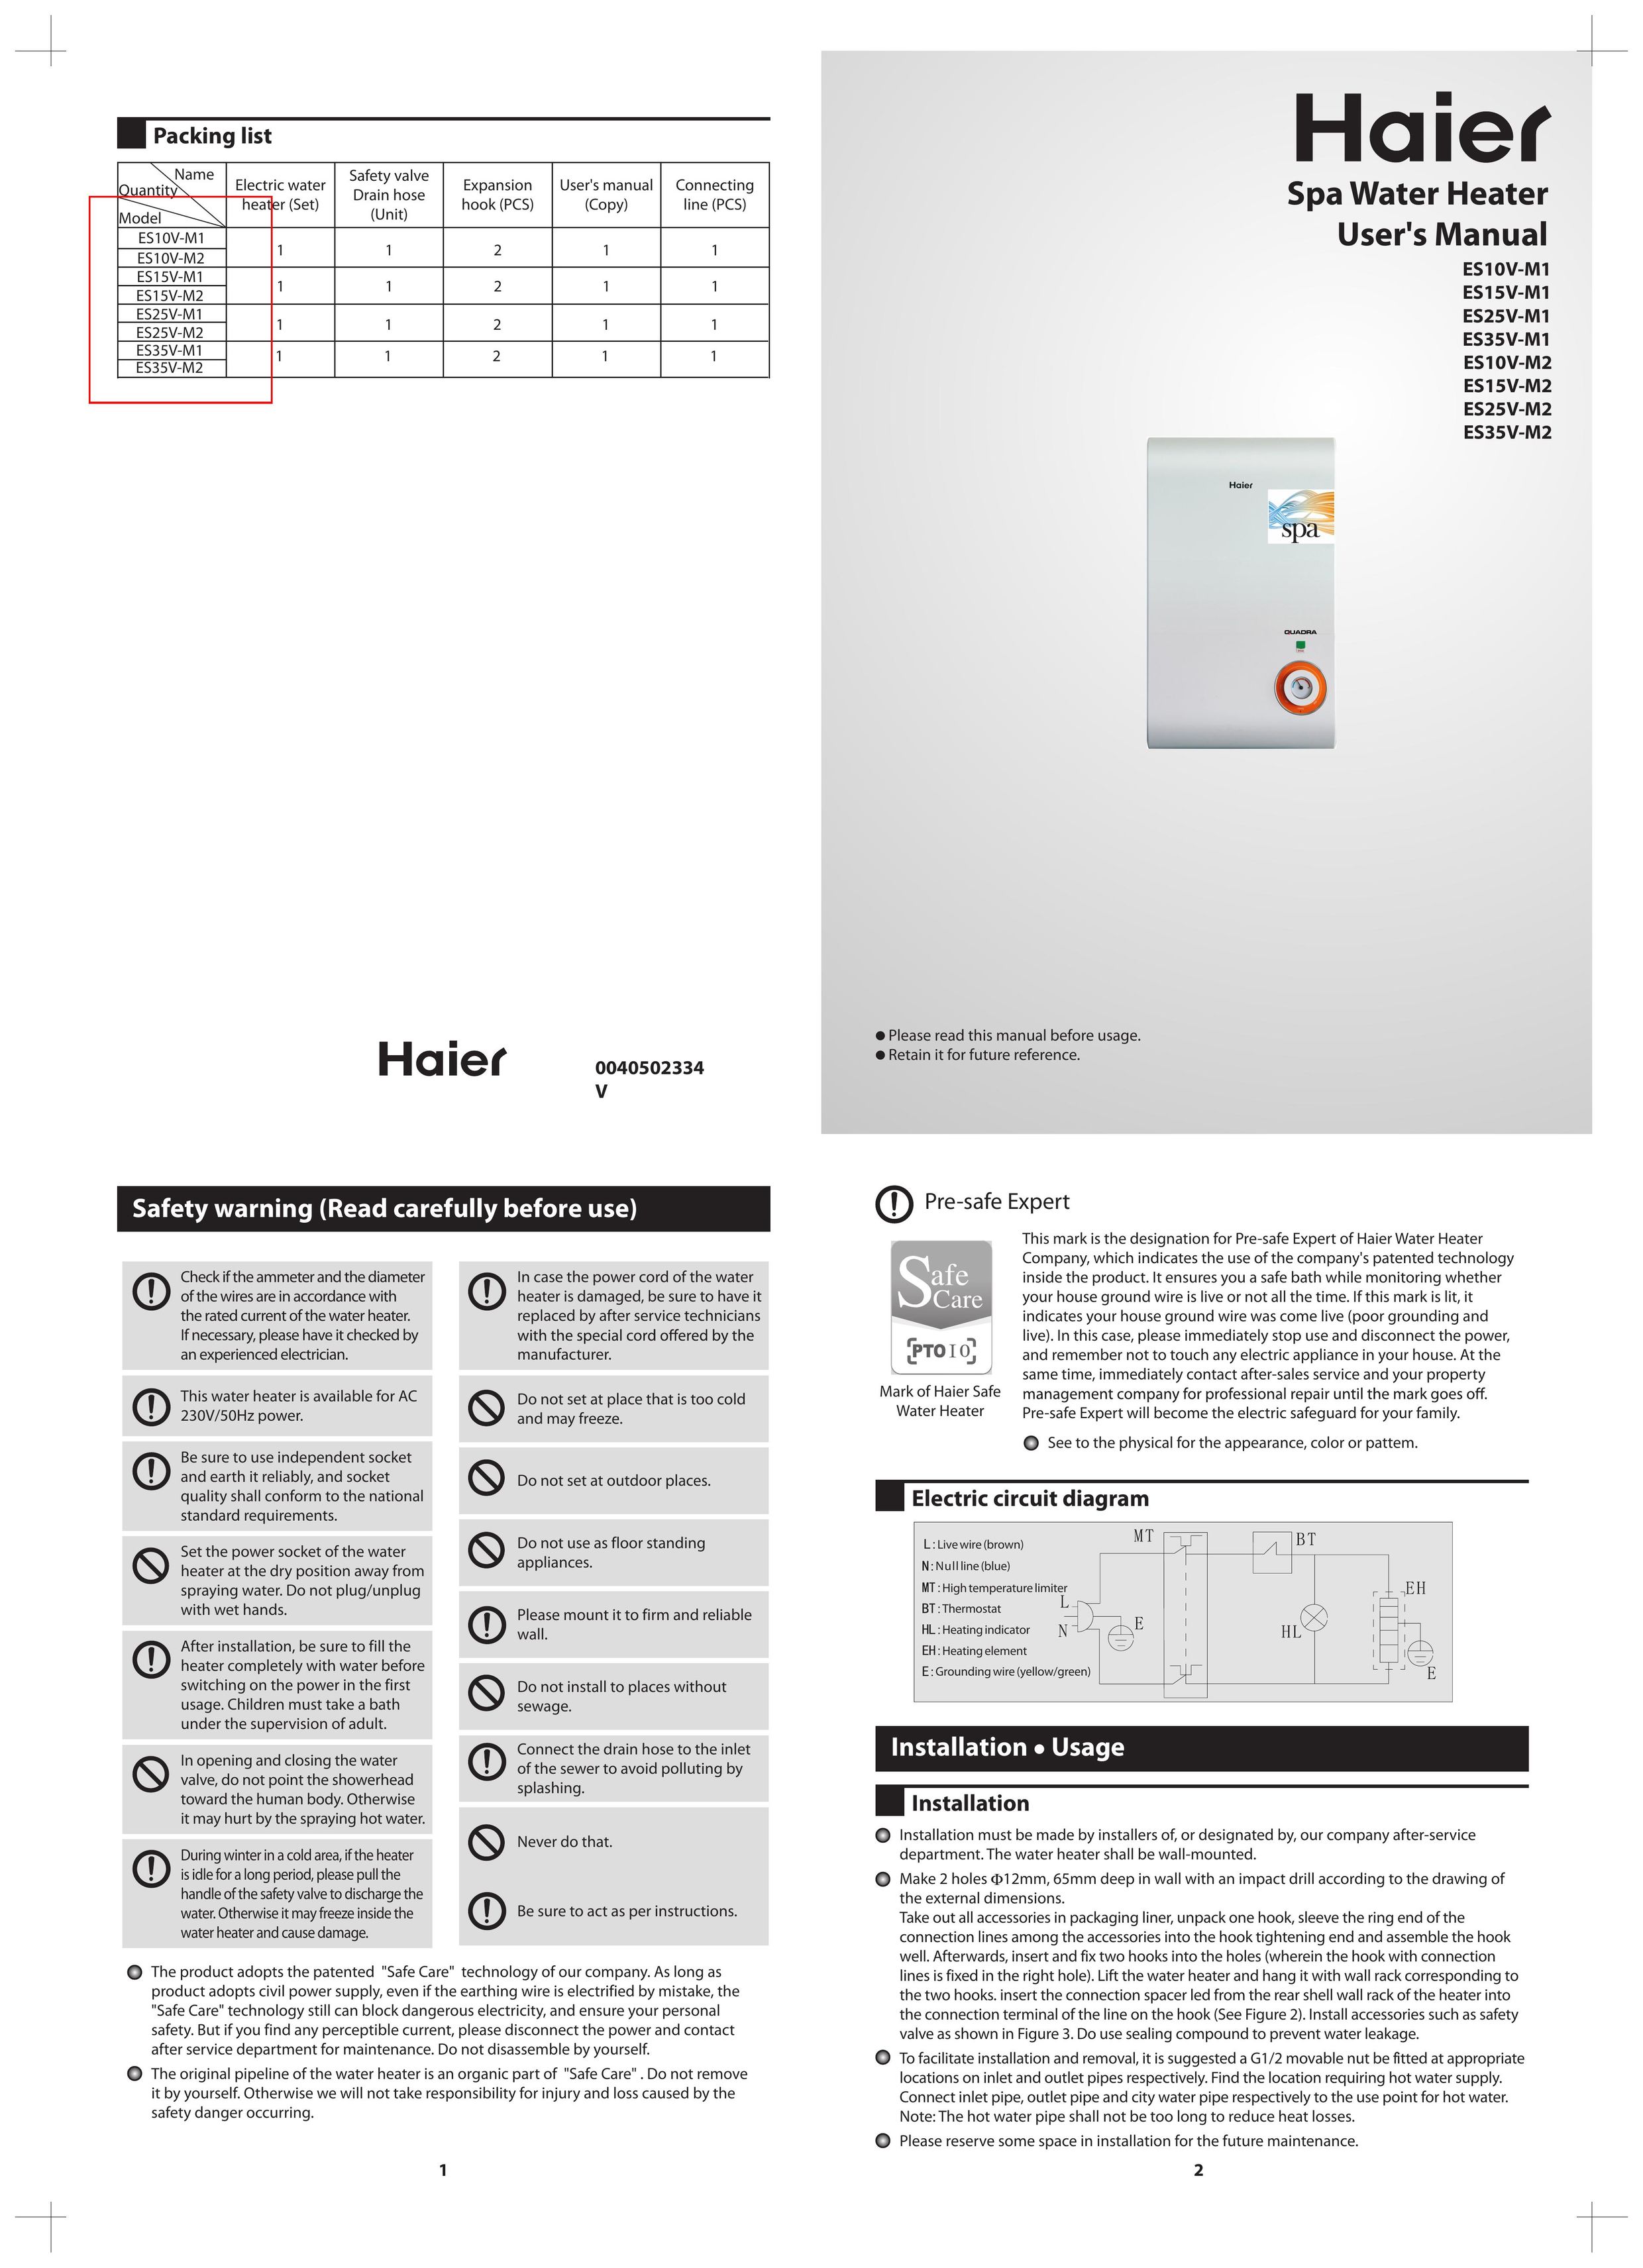 Haier ES15V-M2 Water Heater User Manual